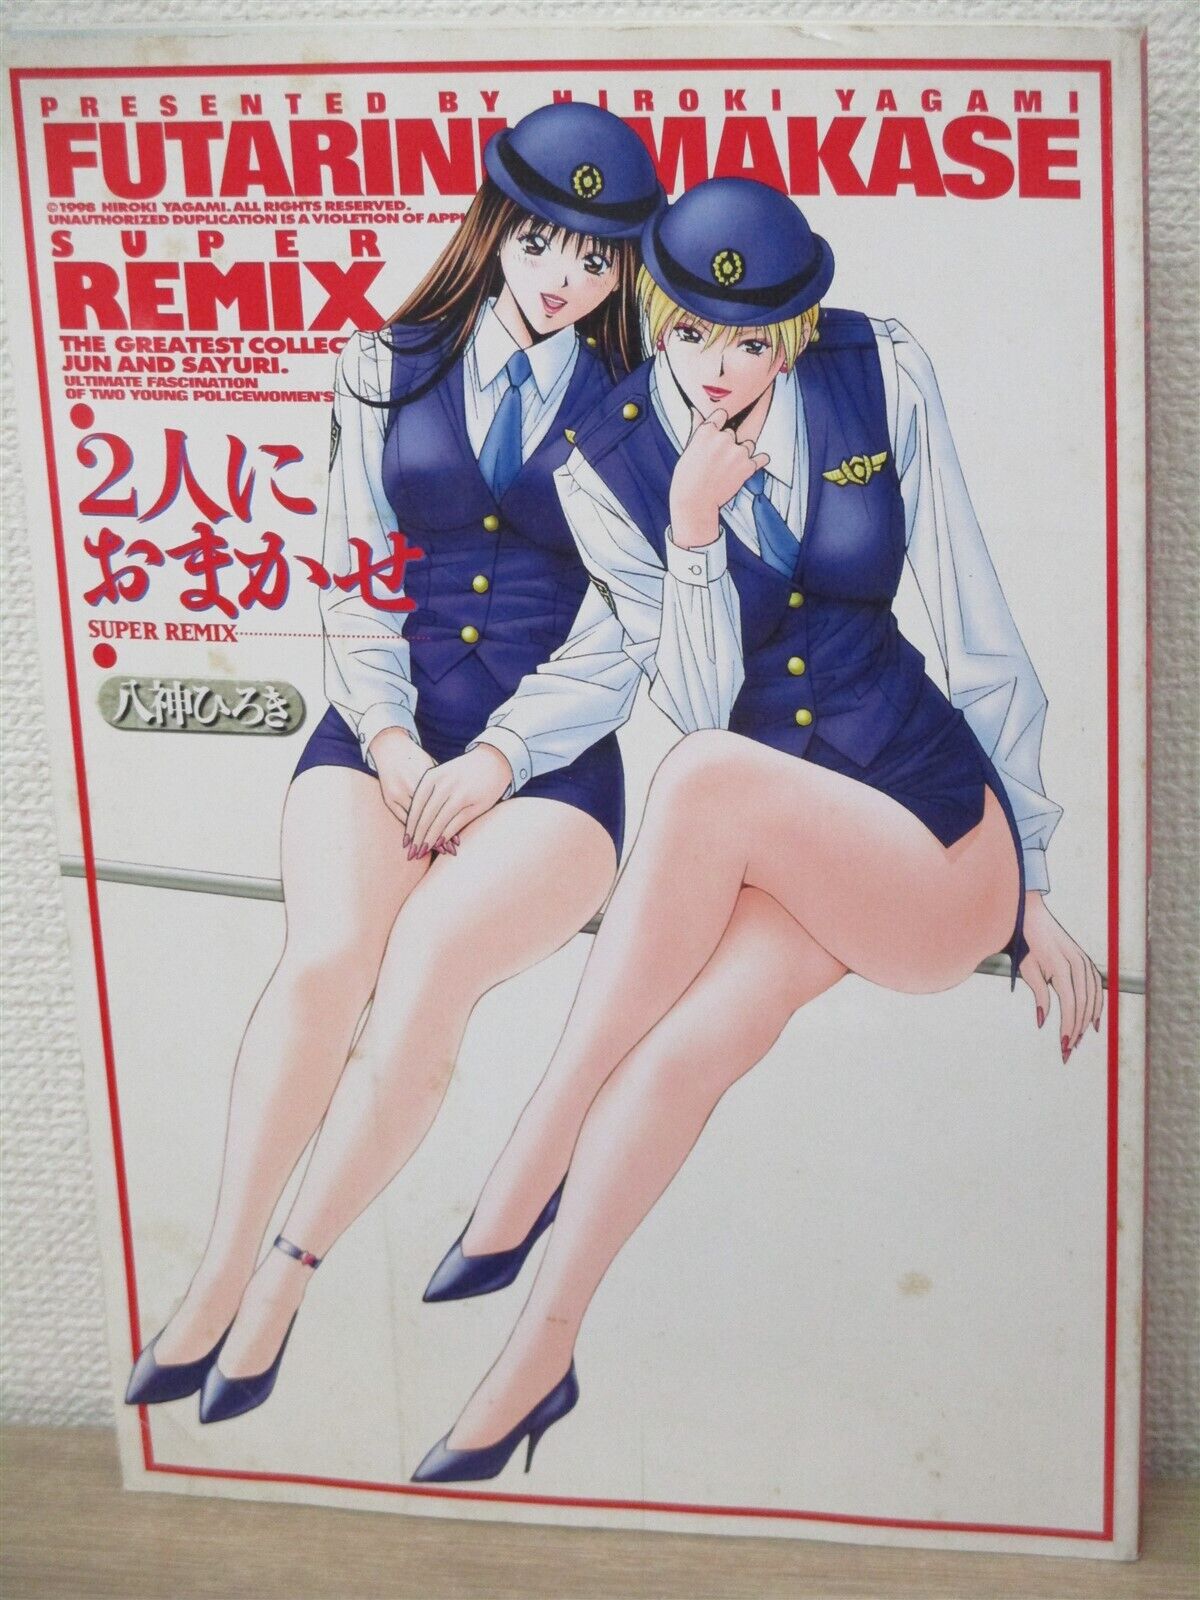 HIROKI YAGAMI Art Book FUTARINI OMAKASE SUPER REMIX w/Card & Poster 1998 KO45*